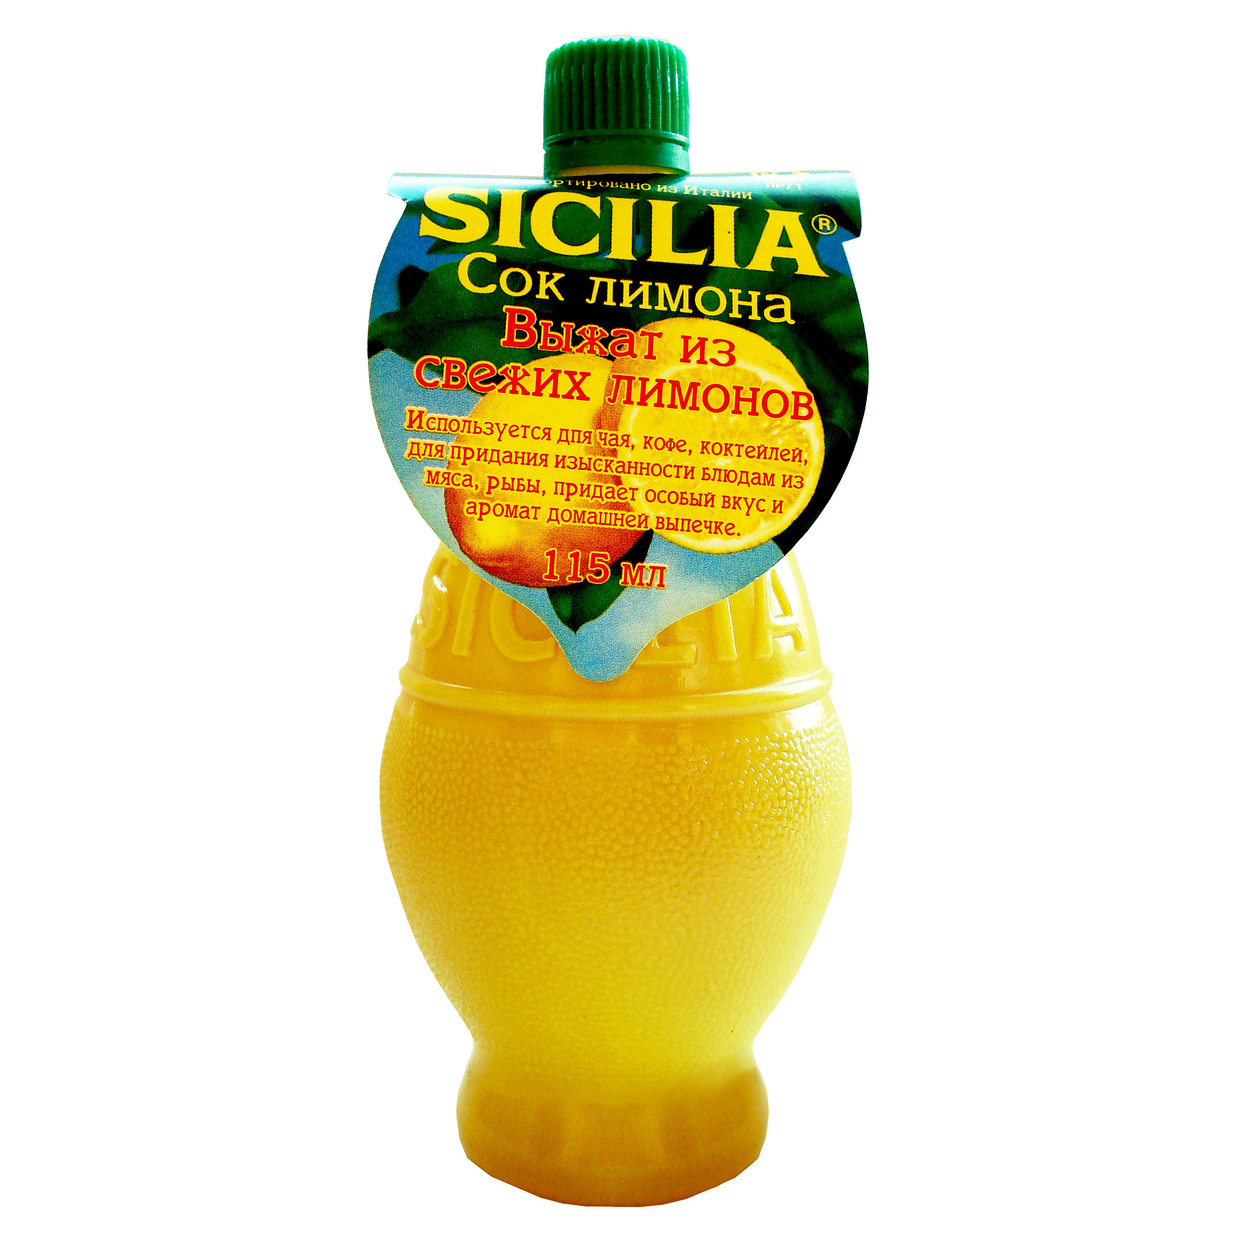 Приправа Sicilia Сок лимона 115мл